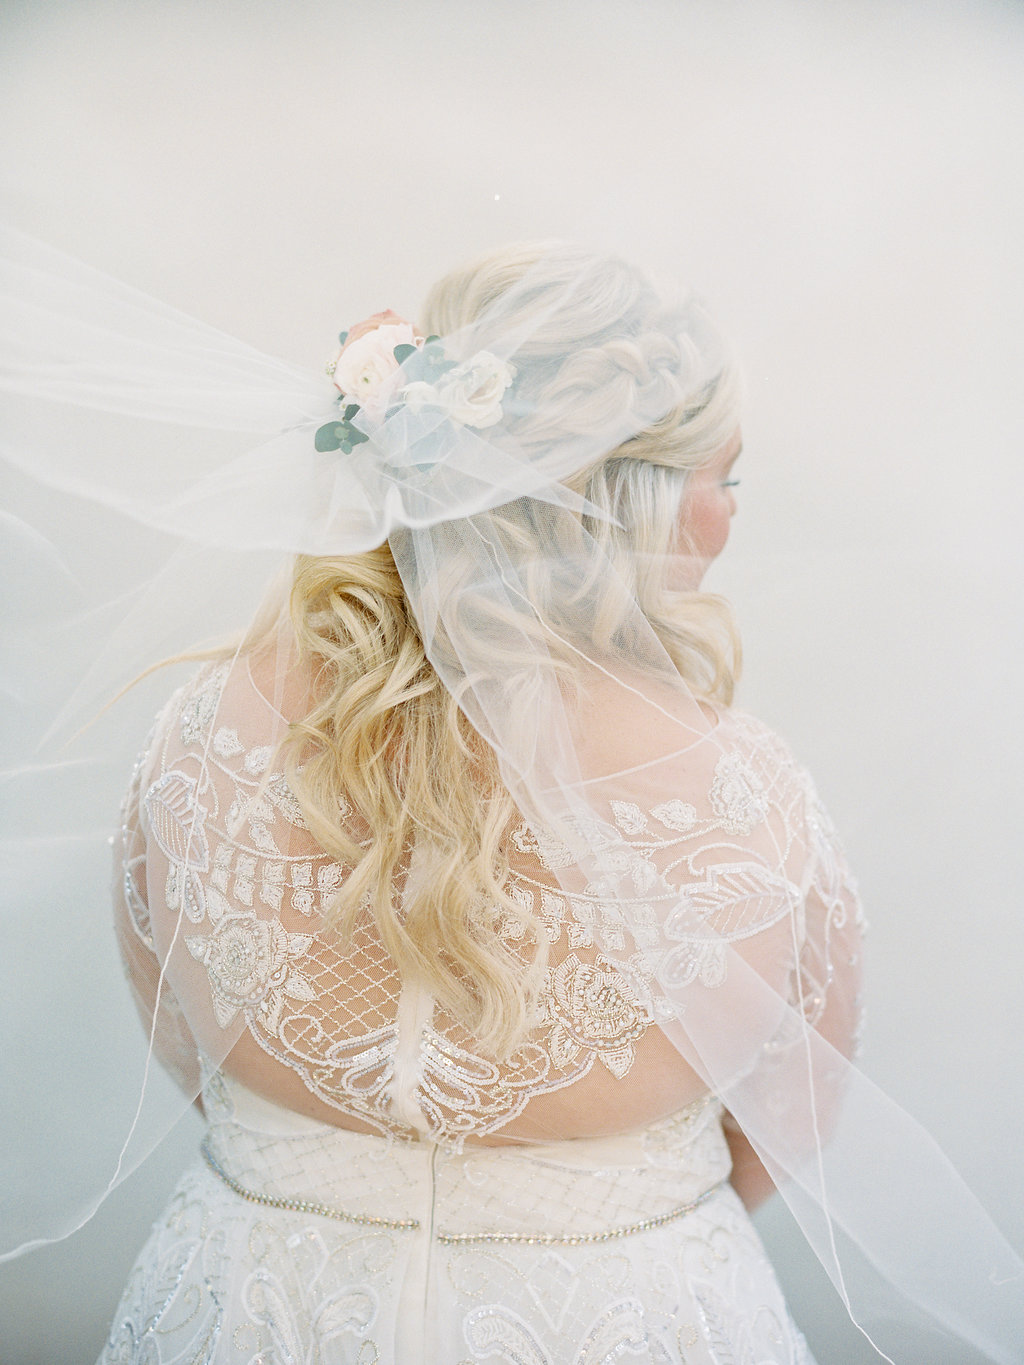 Wedding Dress detail with veil.jpg